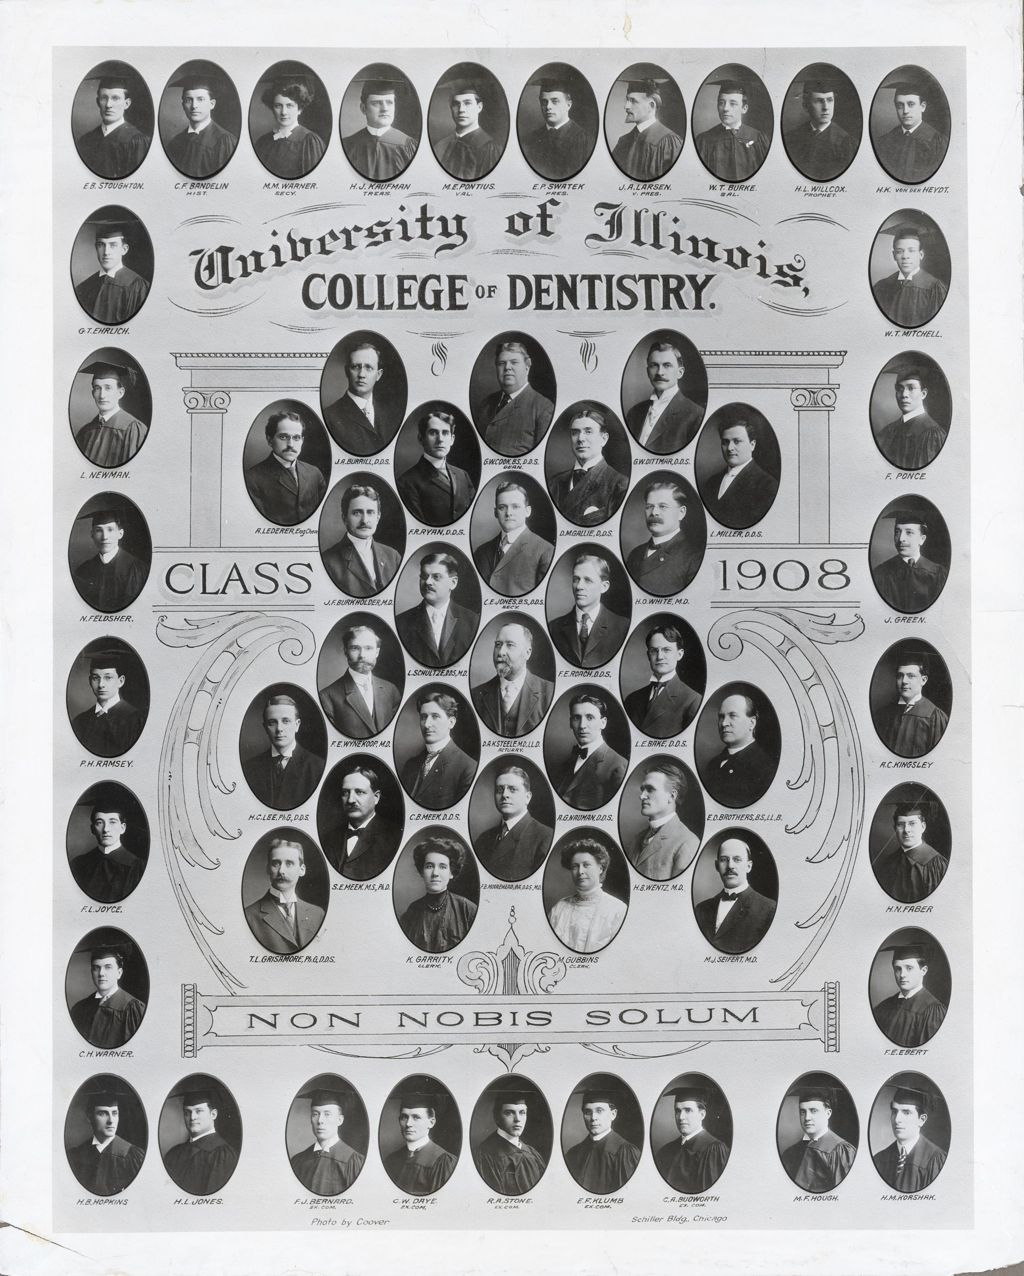 Miniature of 1908 graduating class, University of Illinois College of Dentistry